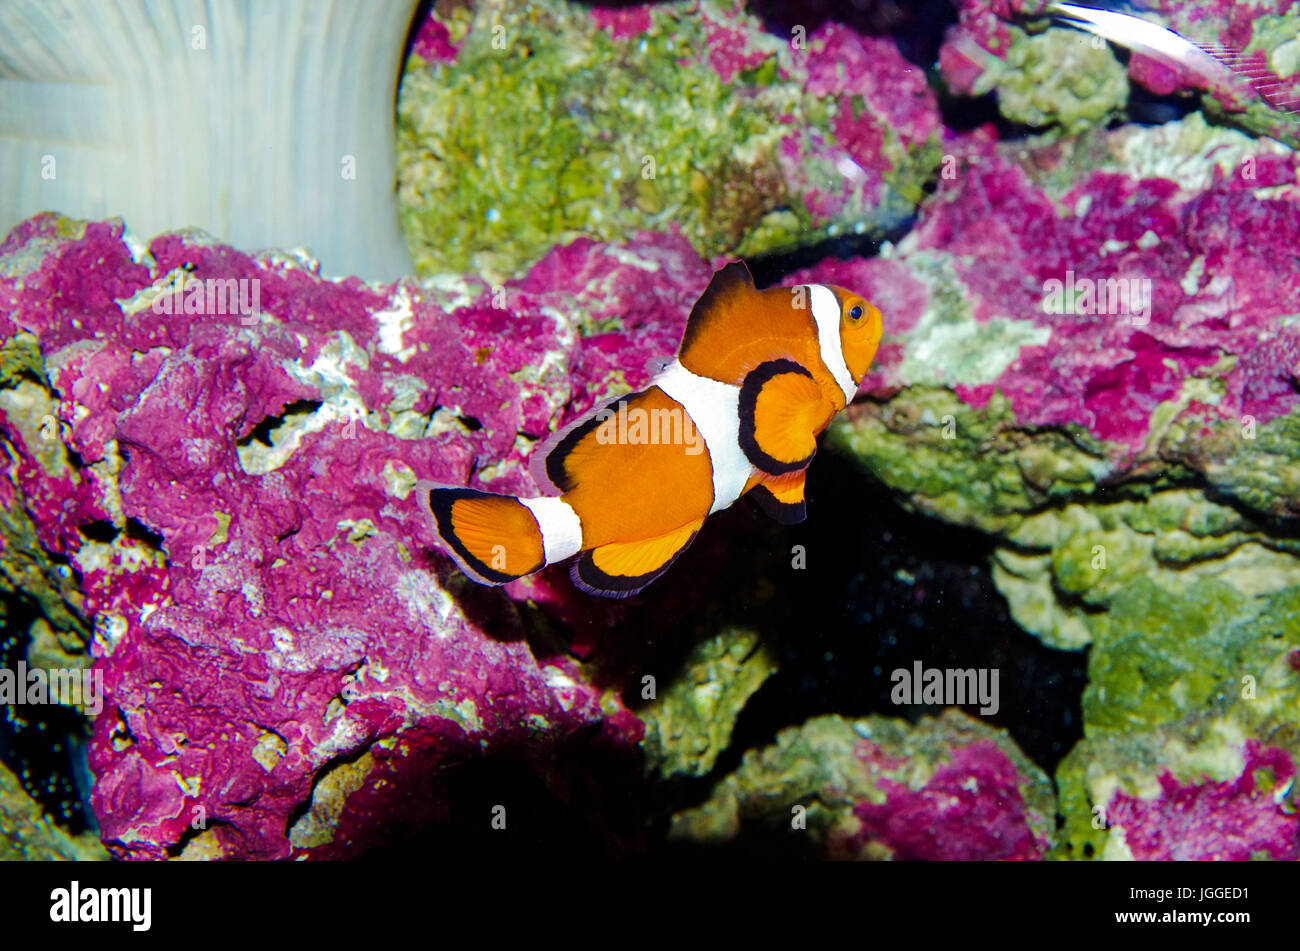 Captain Nemo or Ocellaris clownfish image Stock Photo